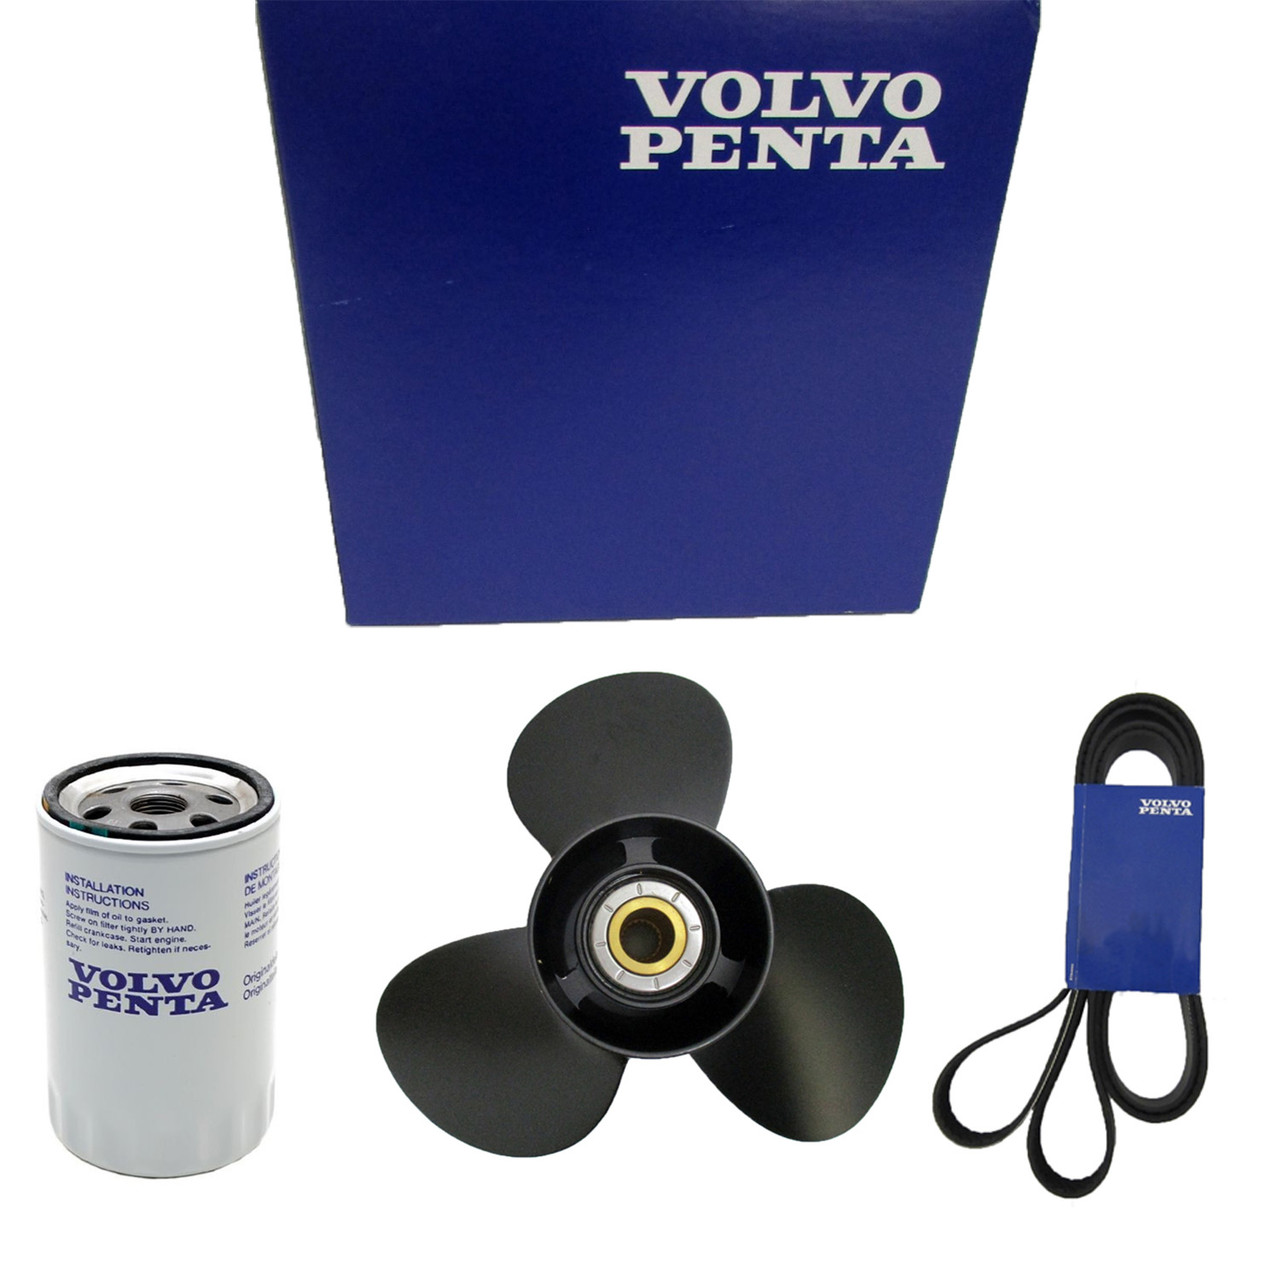 Volvo Penta New OEM Accessories Kit, 3887950